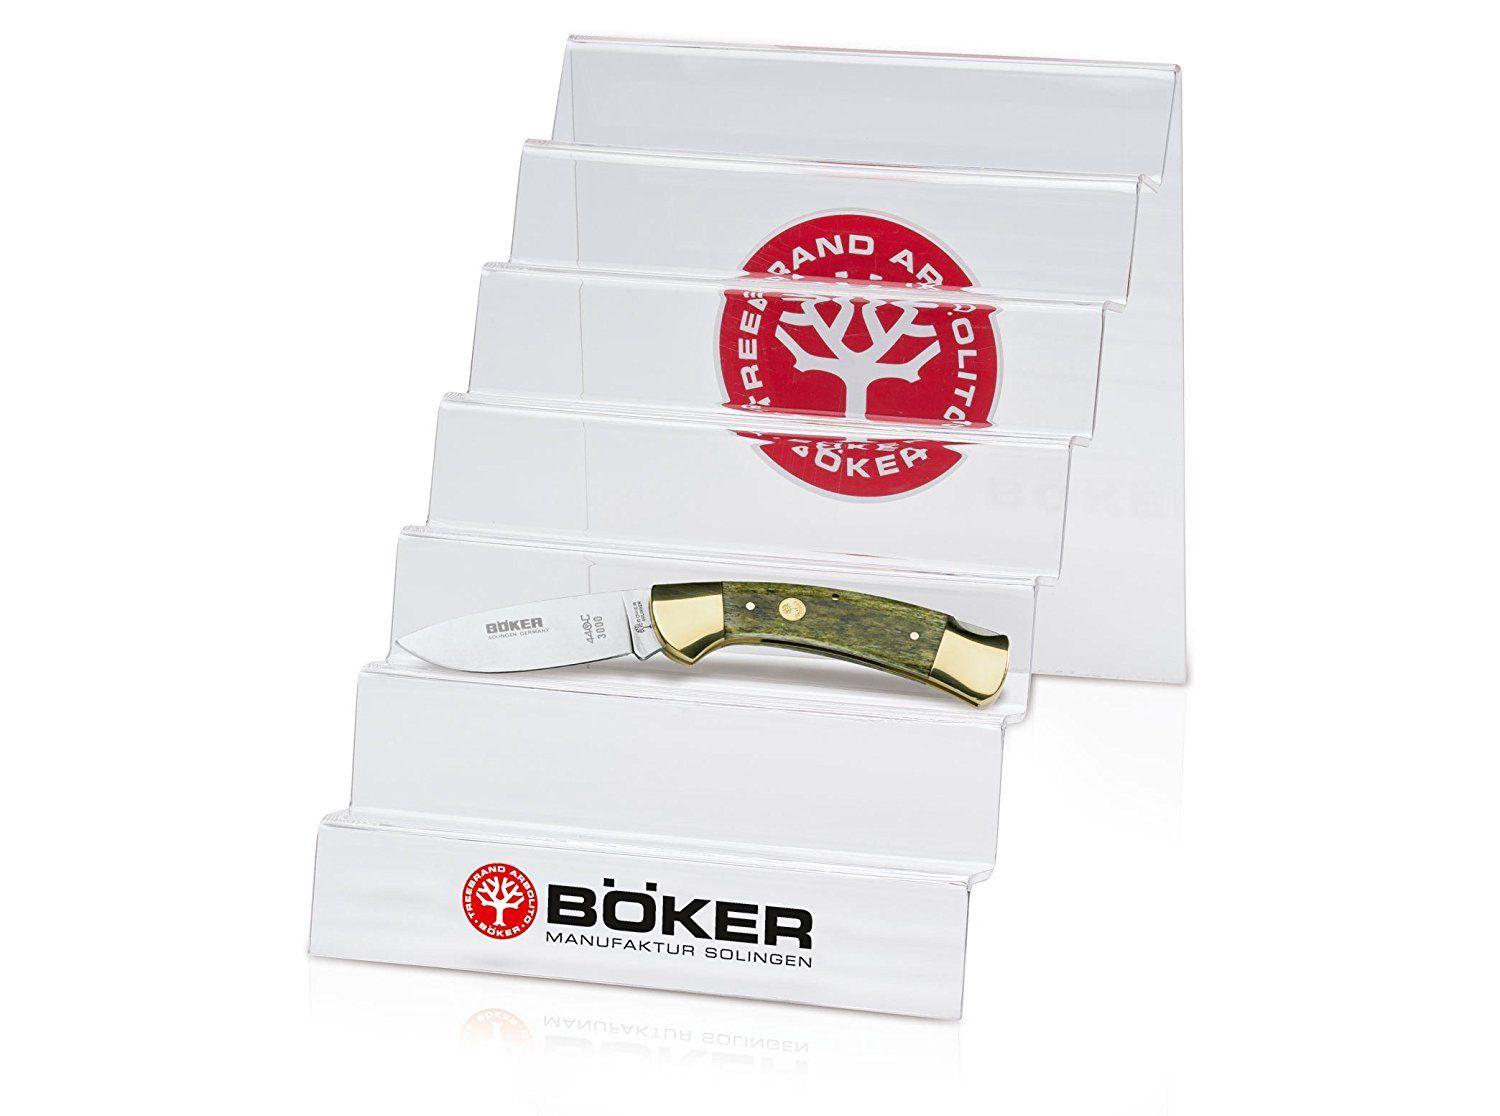 Boker Logo - Cheap Boker Knives Tree Brand, find Boker Knives Tree Brand deals